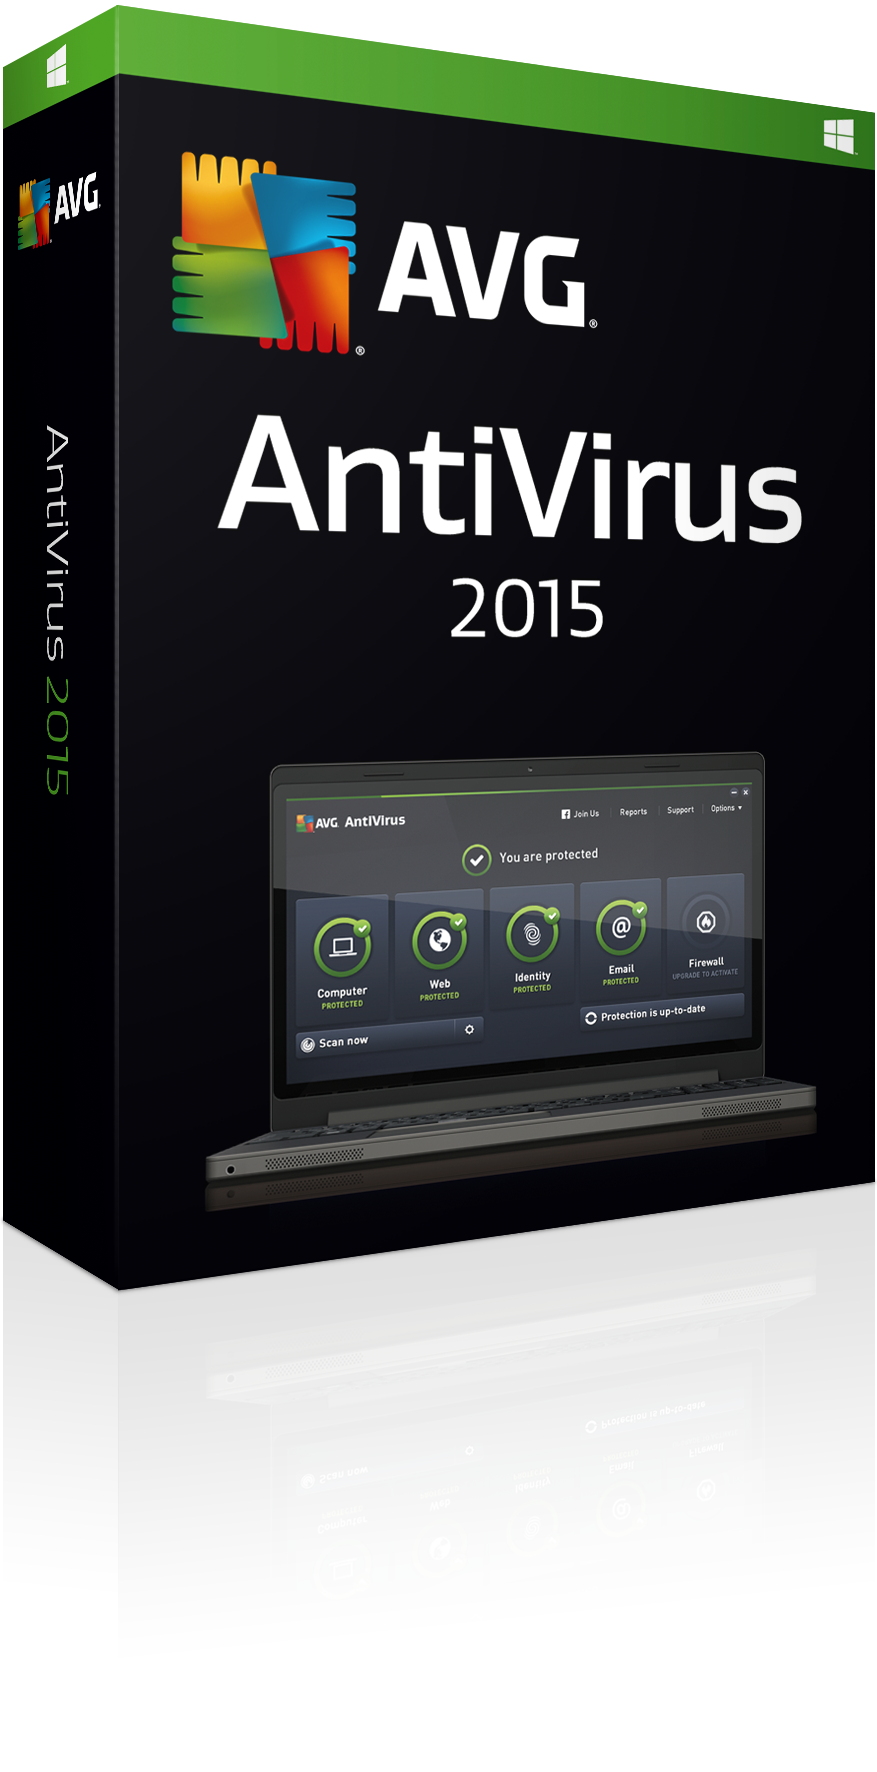 AVG AntiVirus Clear (AVG Remover) 23.10.8563 download the last version for apple